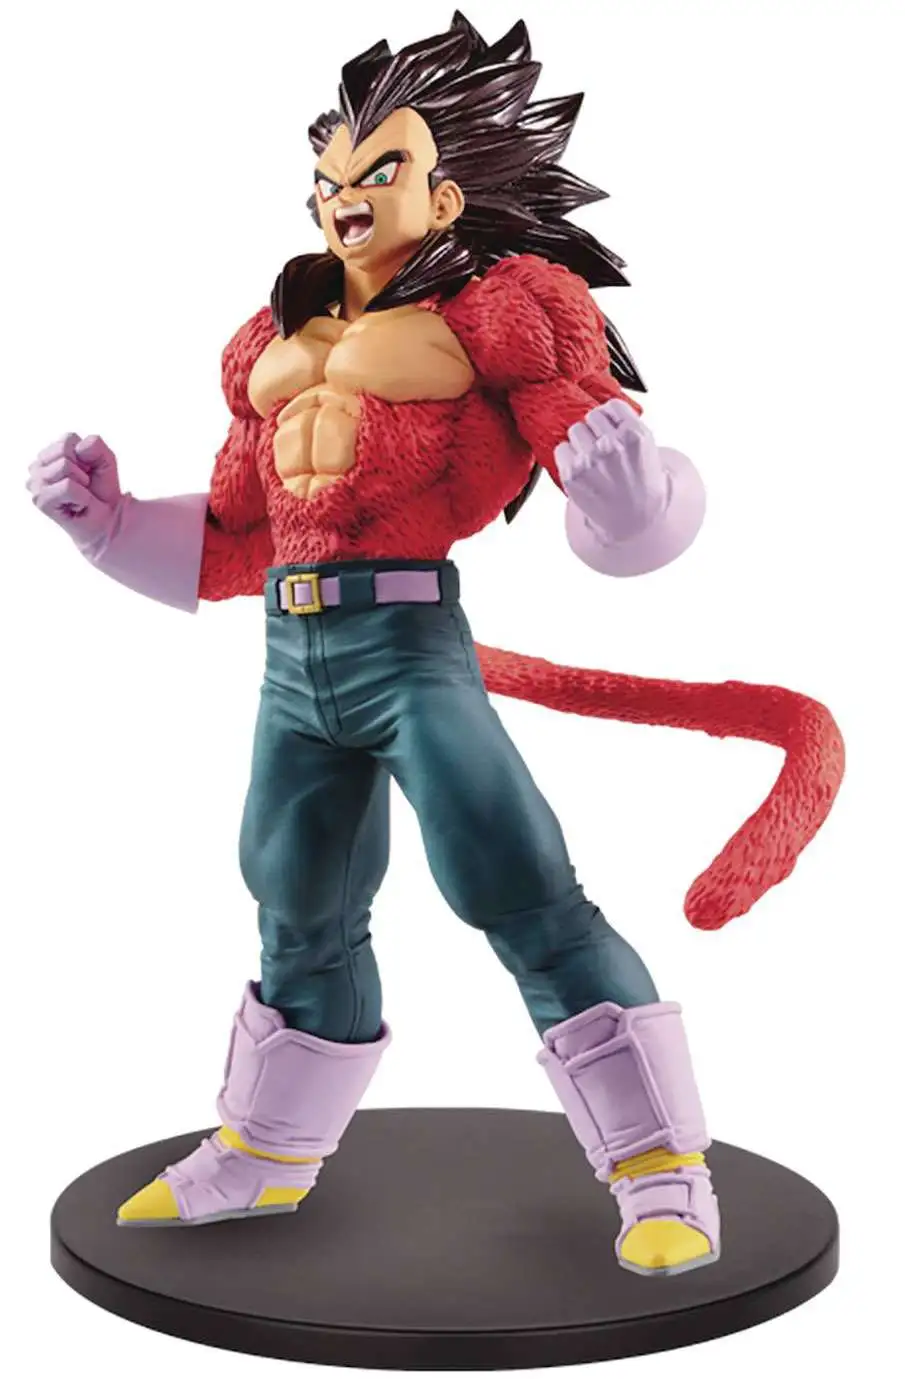 Dragon Ball Z Vegeta SSJ4 action figure toy model Super Saiyan figurine level 4 